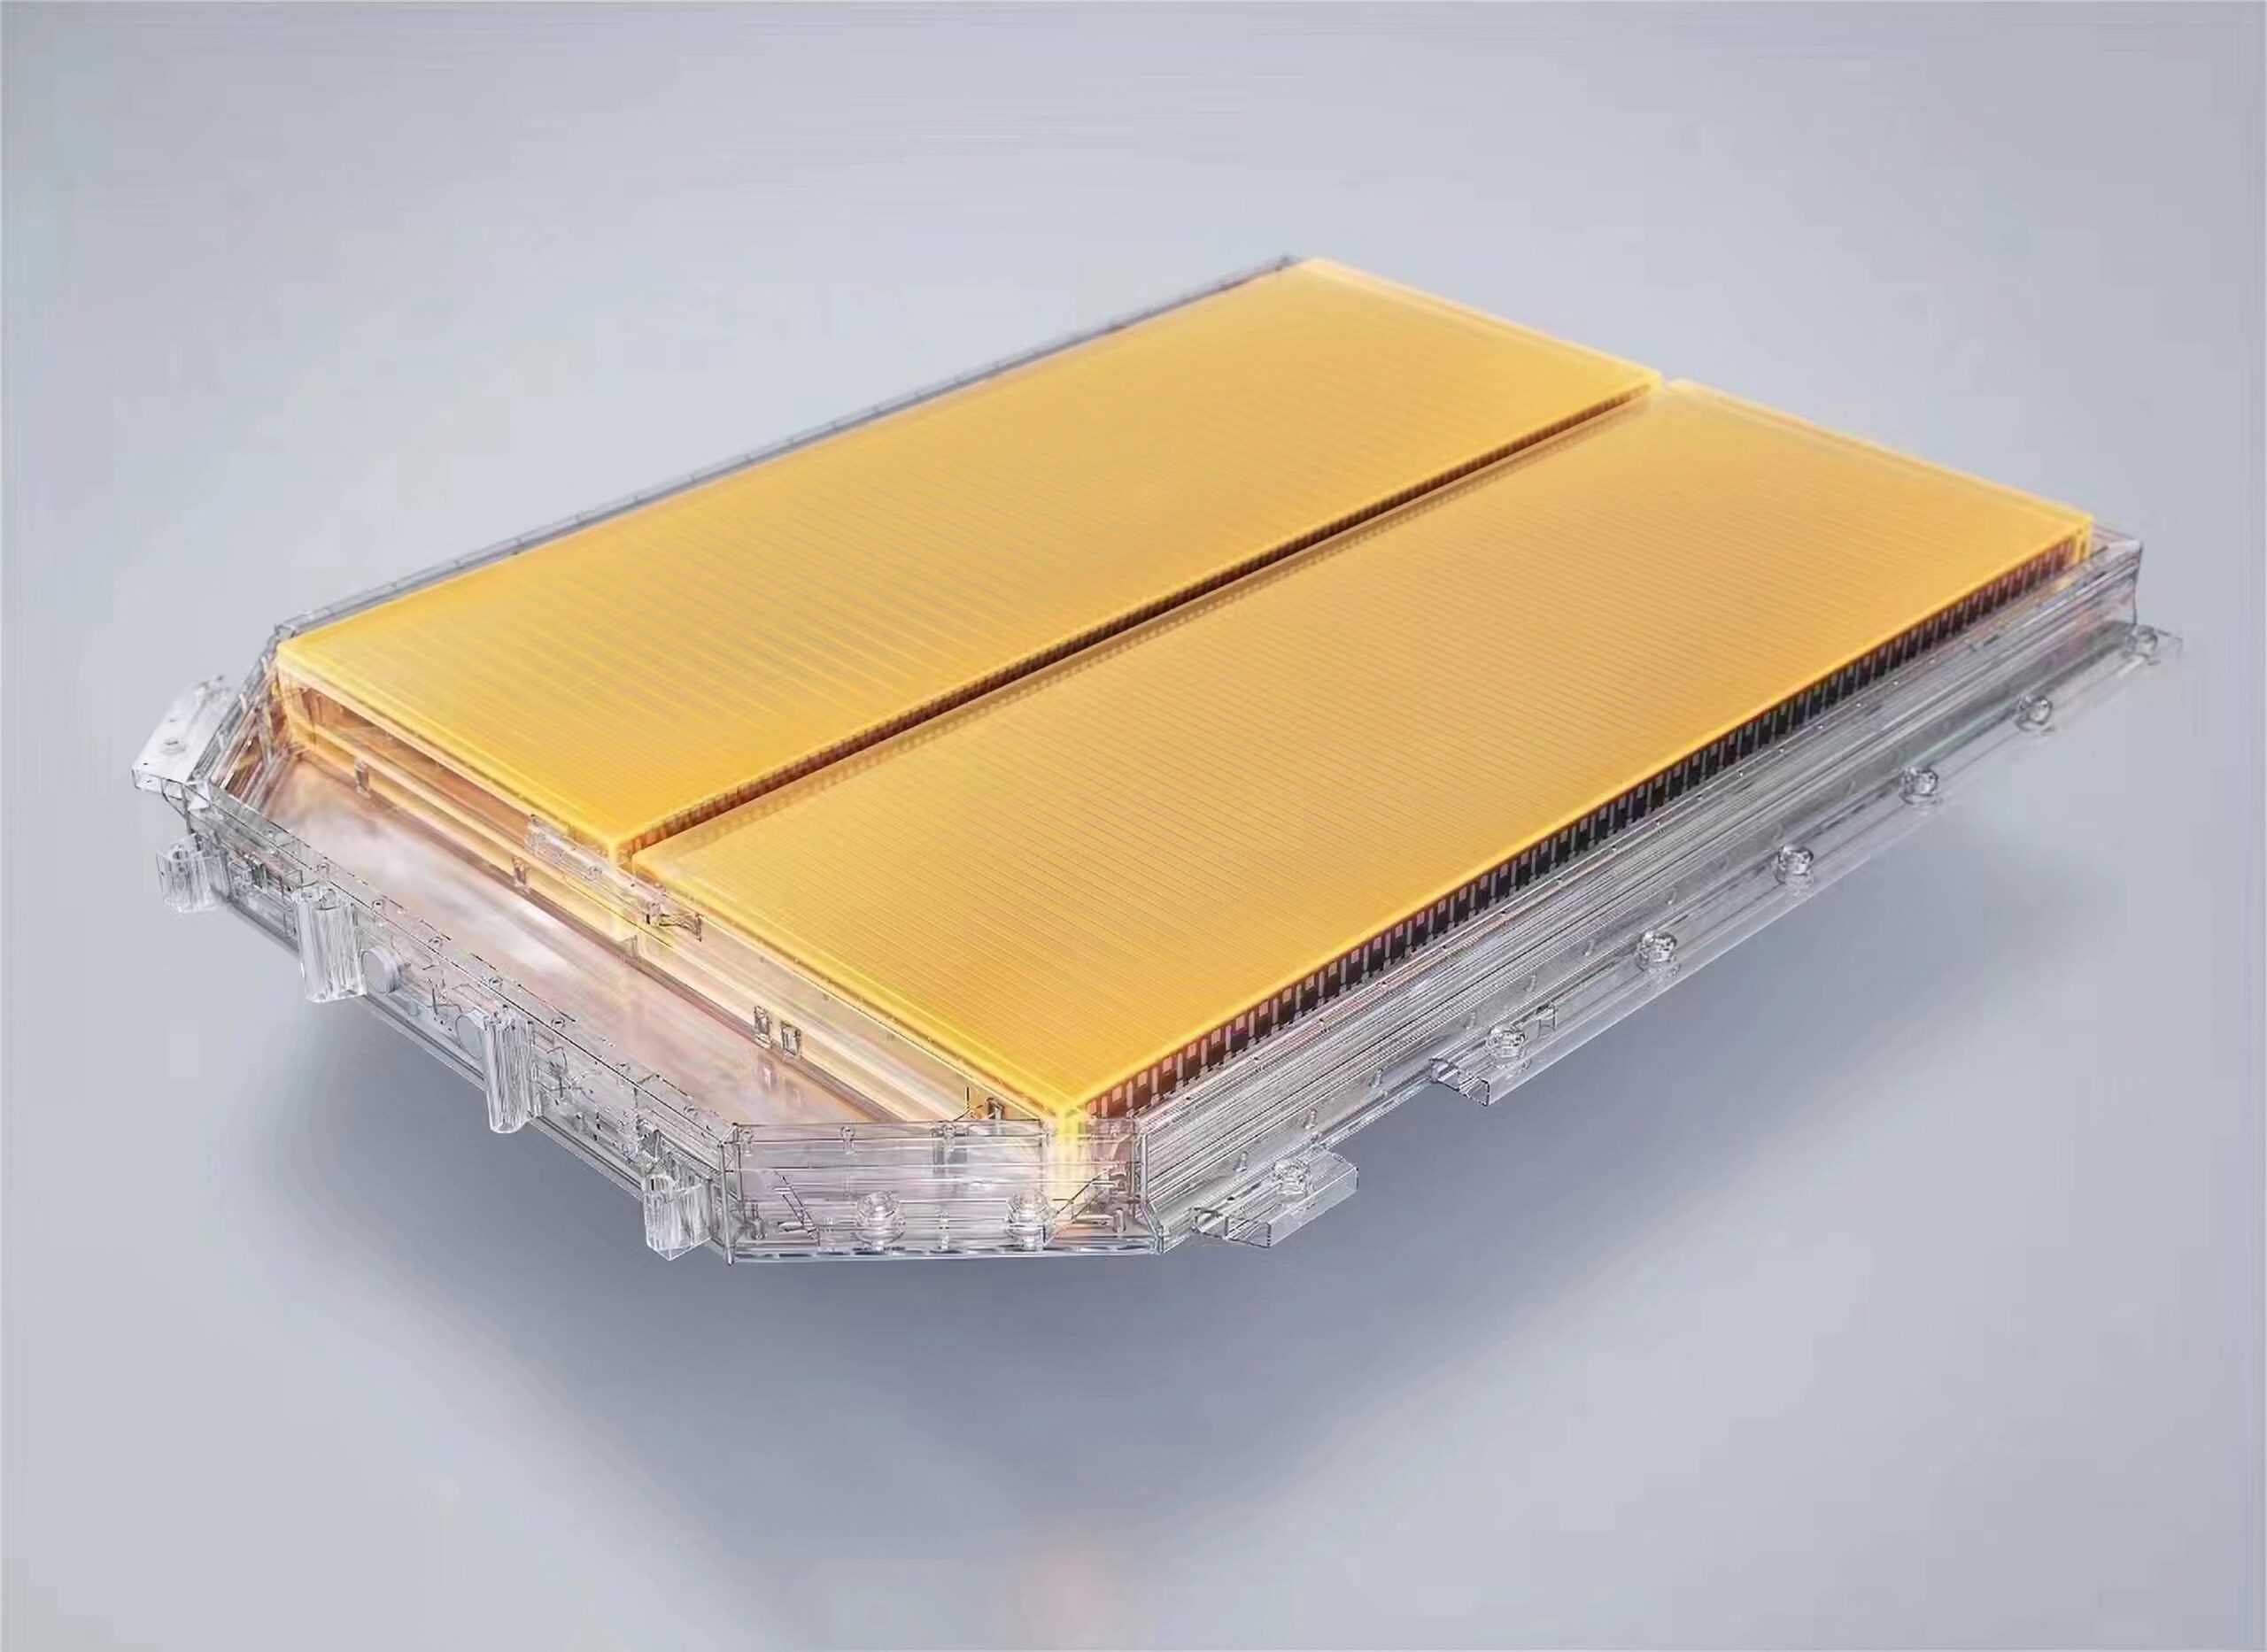 Nove zlate baterije Zeekr so ... zlate - CleanTechnica